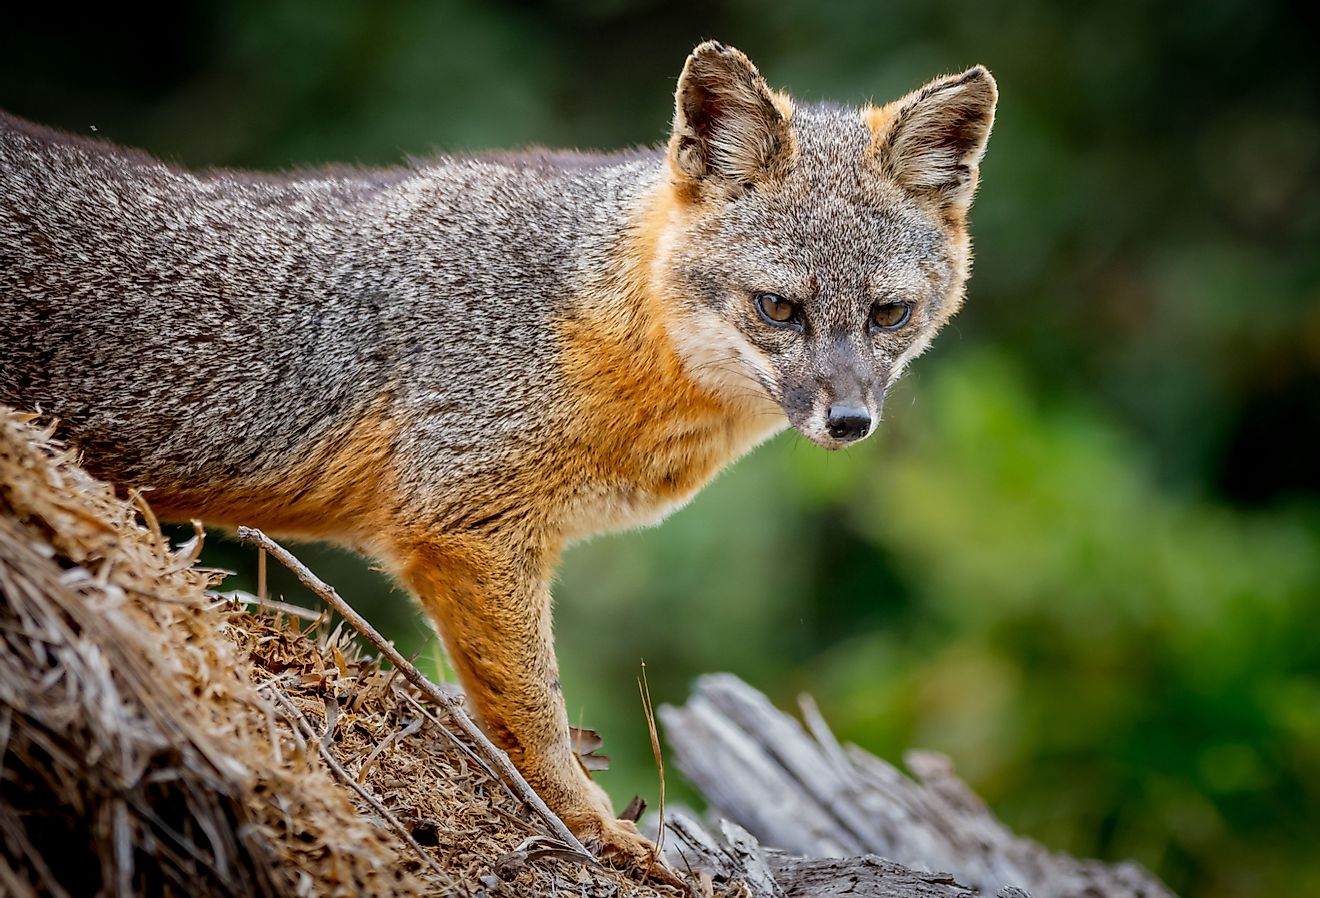 Close-up image of an island fox (Urocyon littoralis) posing on Santa Cruz Island.